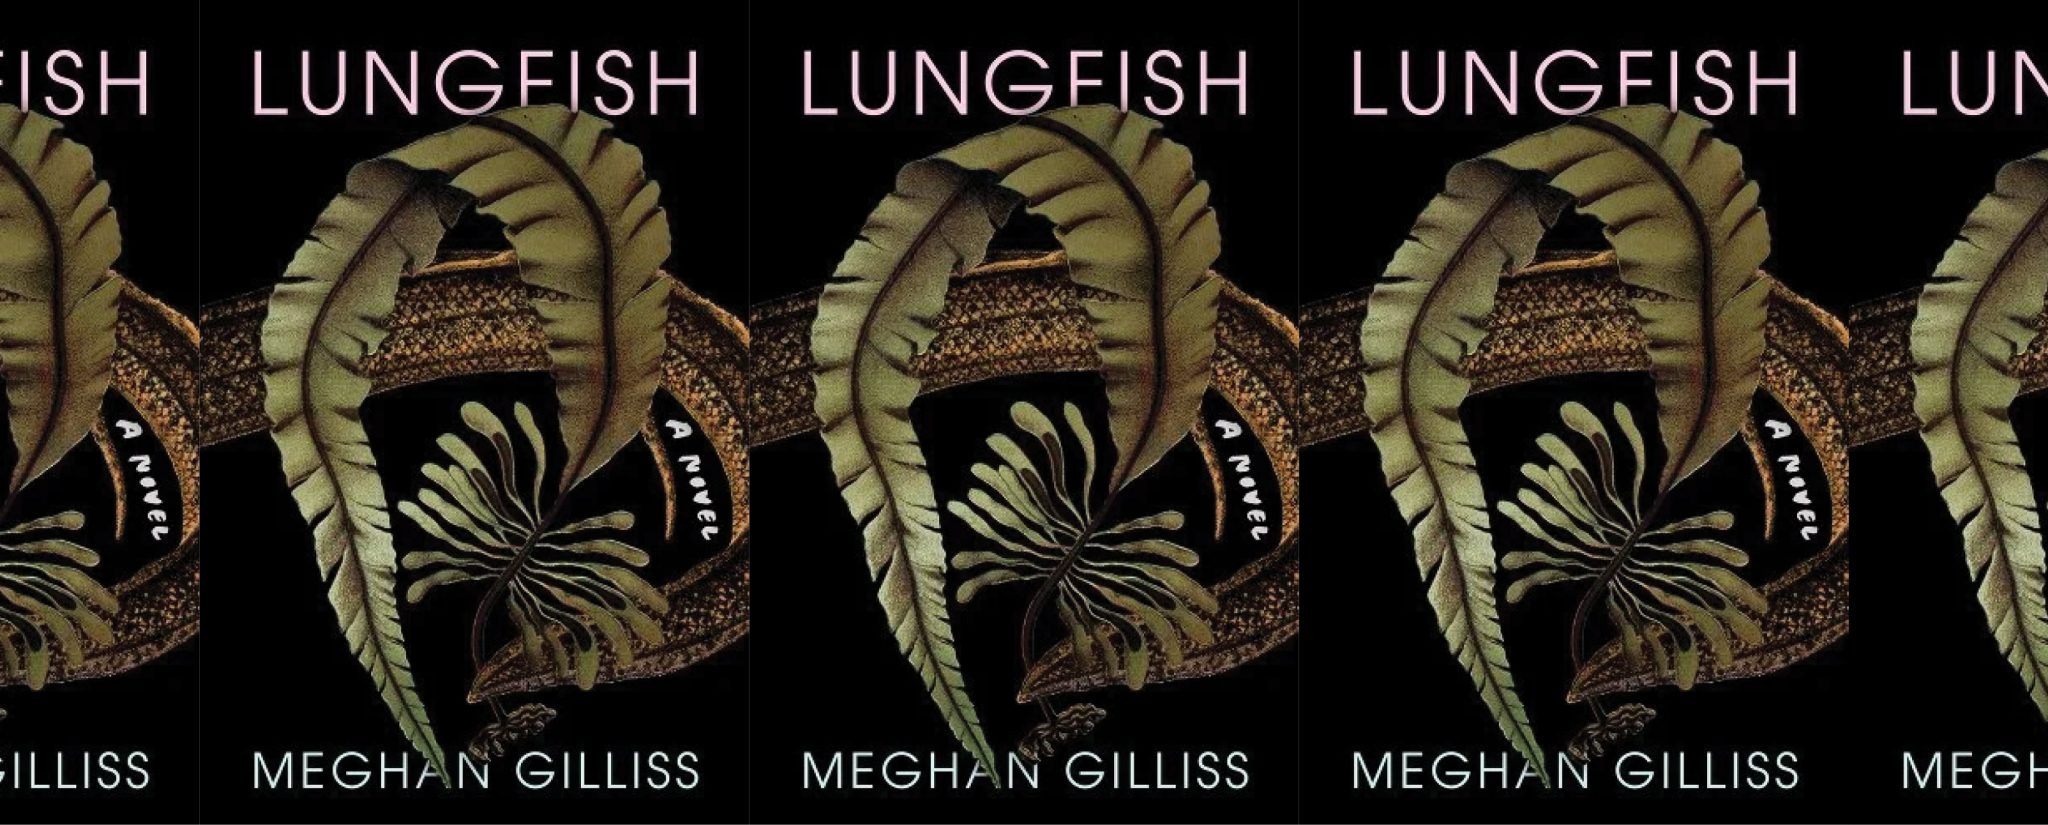 lungfish meghan gilliss